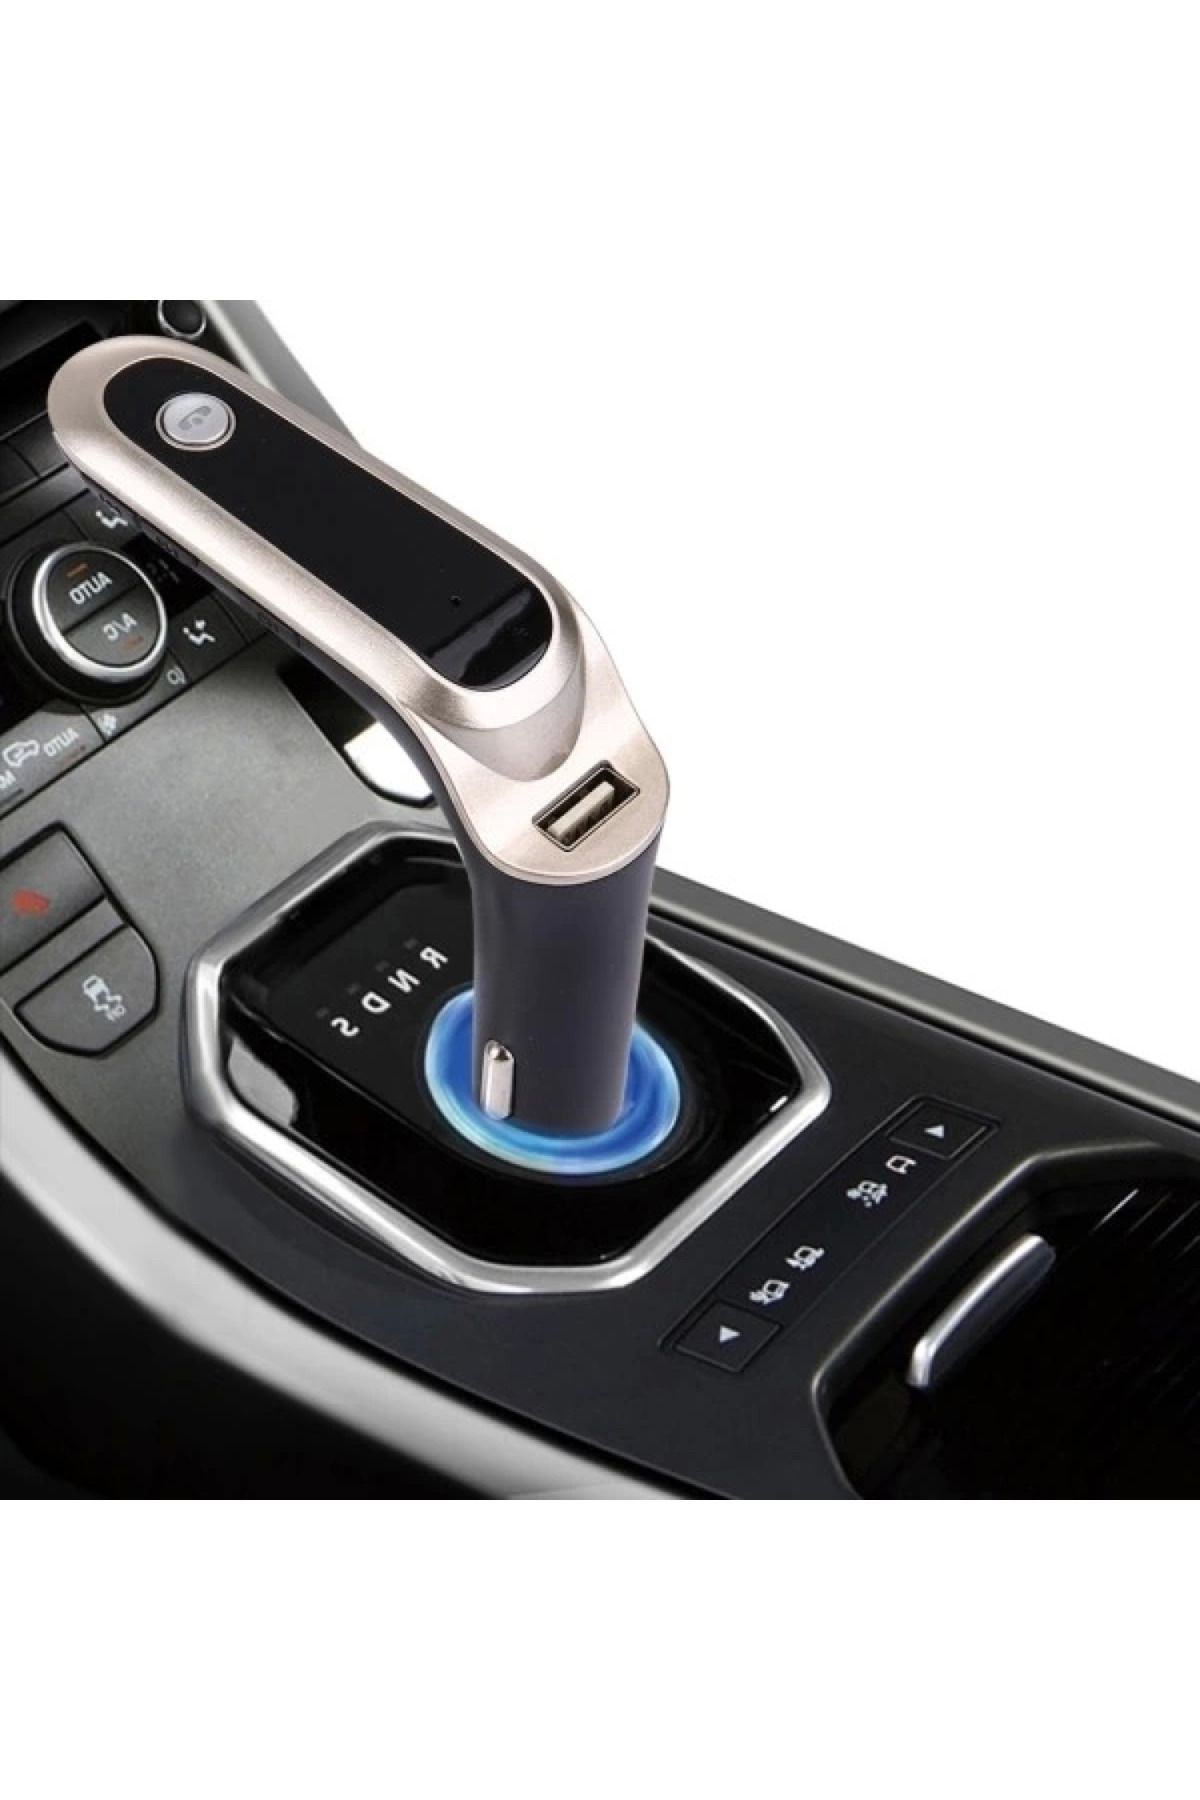 GUWWEN Cars7 Bluetooth Hafıza Kart Girişli 4.0 Araç Kiti Çakmaklık Mp3 Fm Transmitter